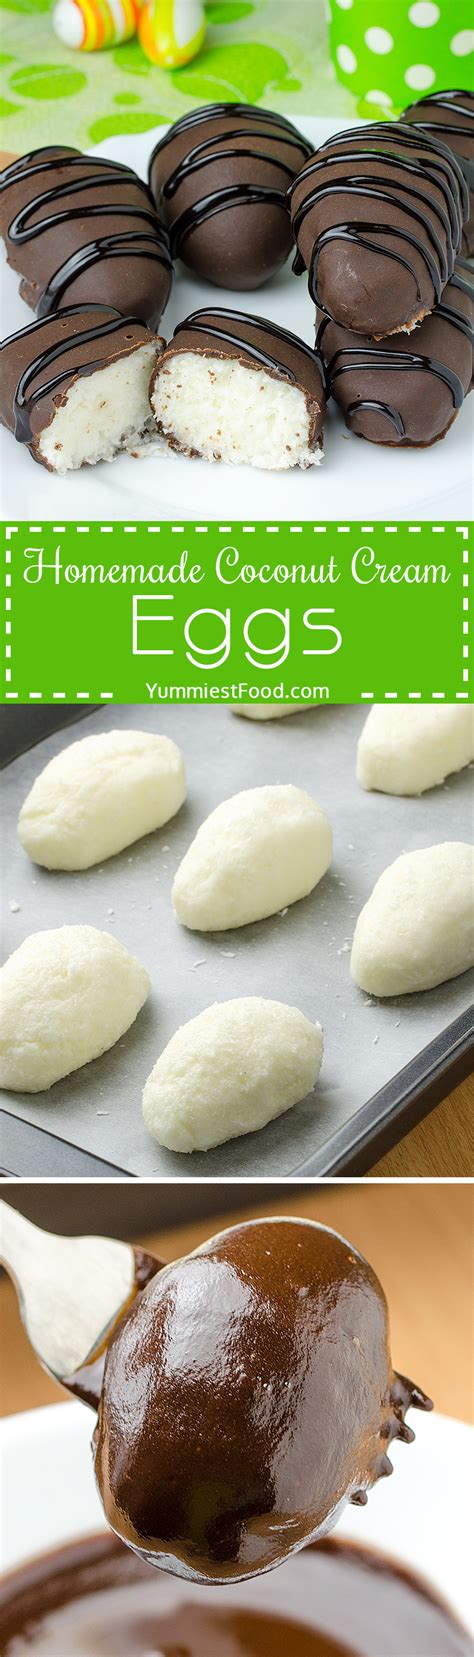 homemade-coconut-cream-eggs-recipe-from image